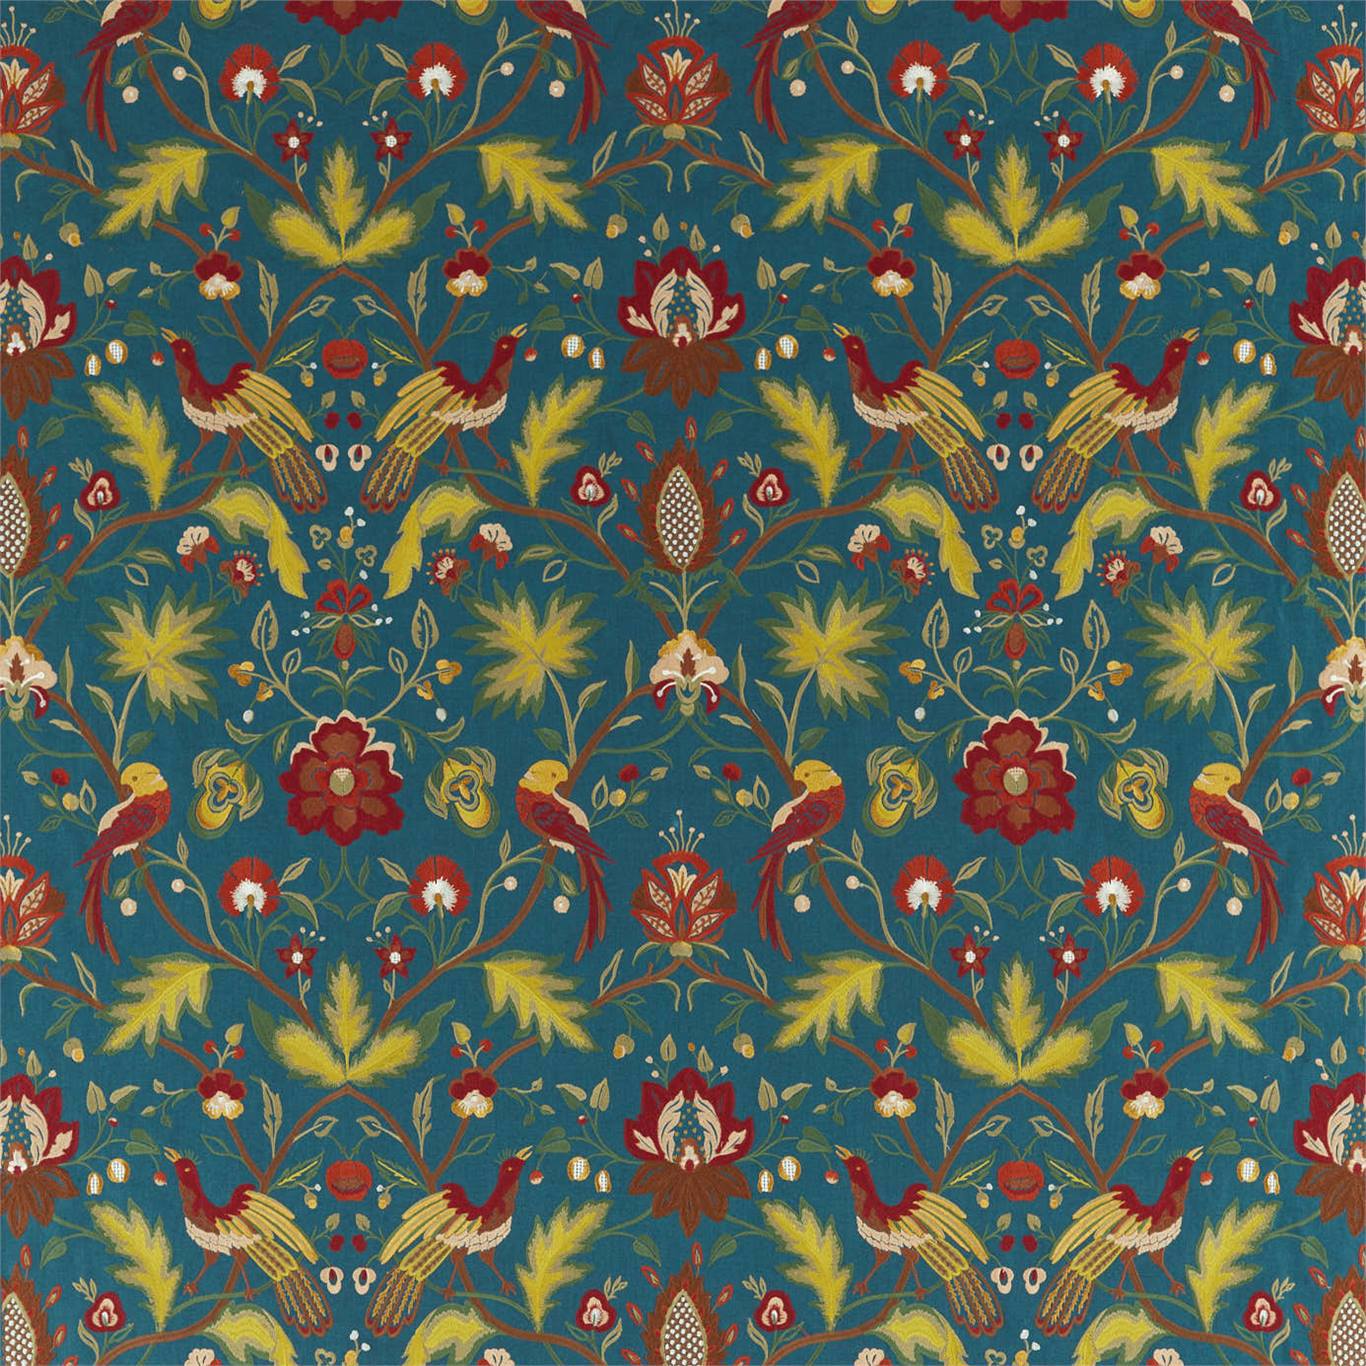 Oiseaux de Paradis Embroidery Prussian Blue Fabric by ZOF